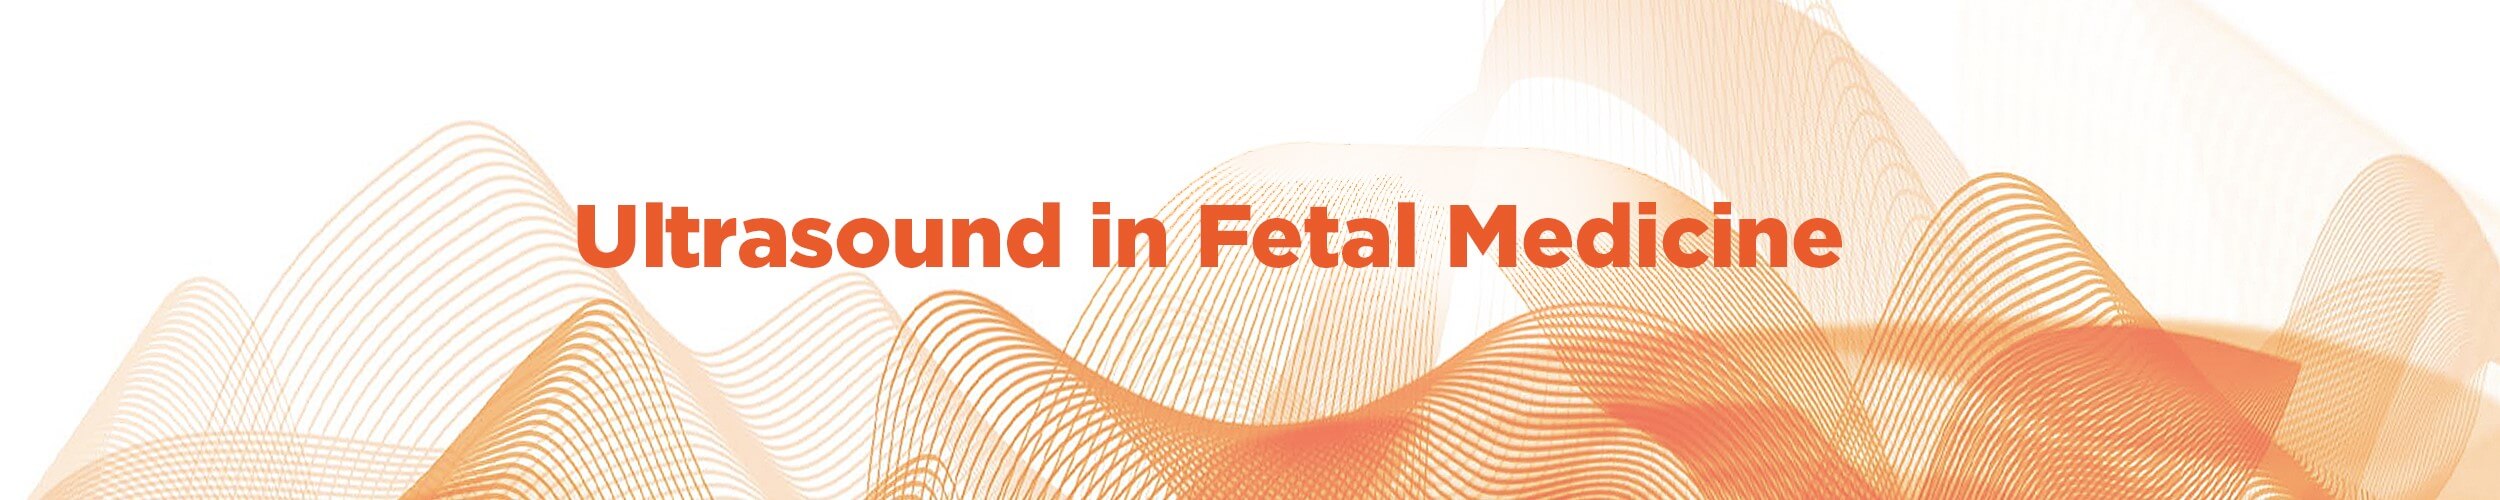 Ultrasound In Fetal Medicine